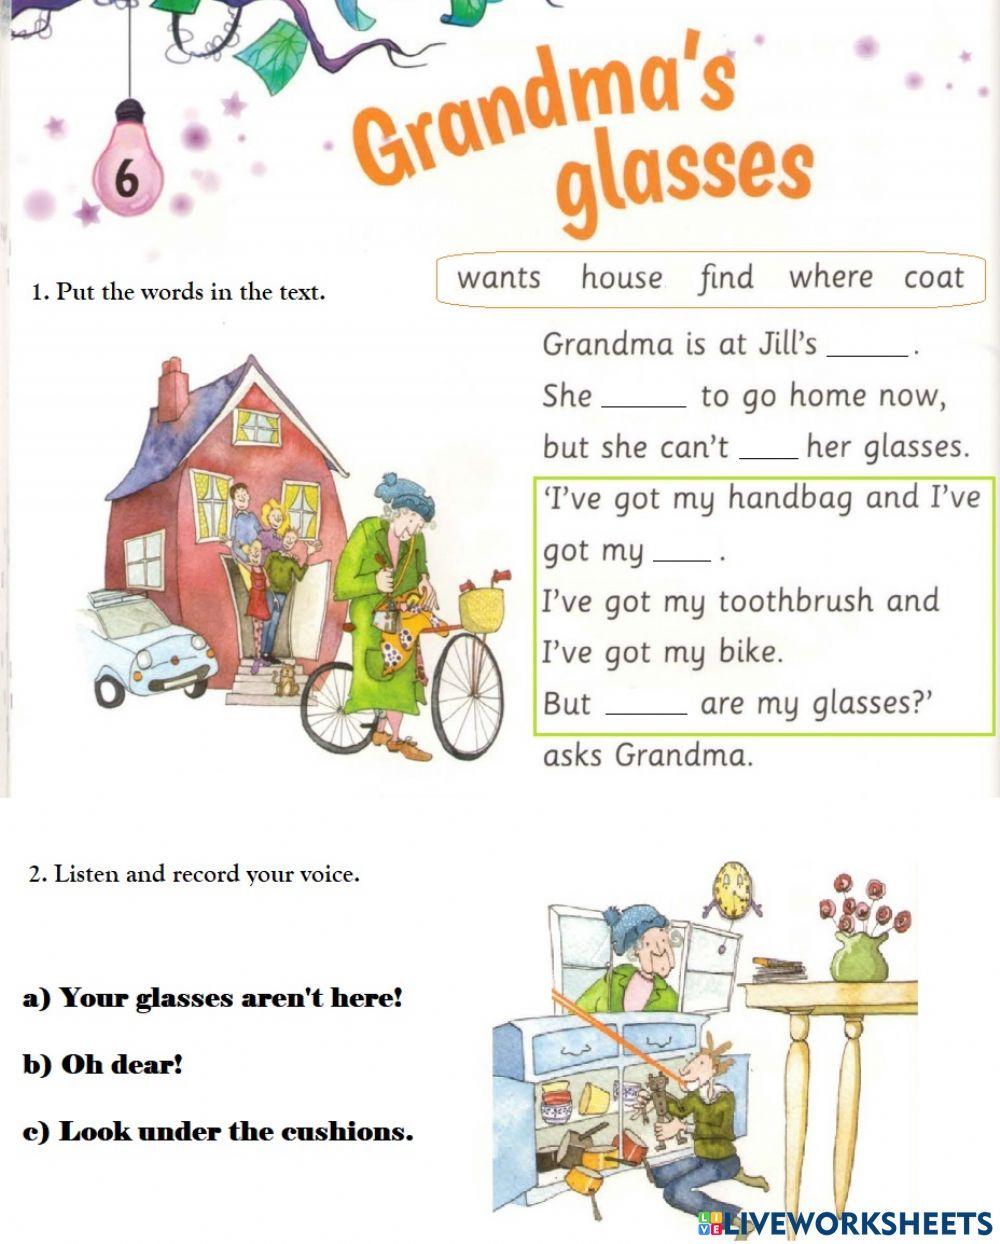 Grandma's glasses